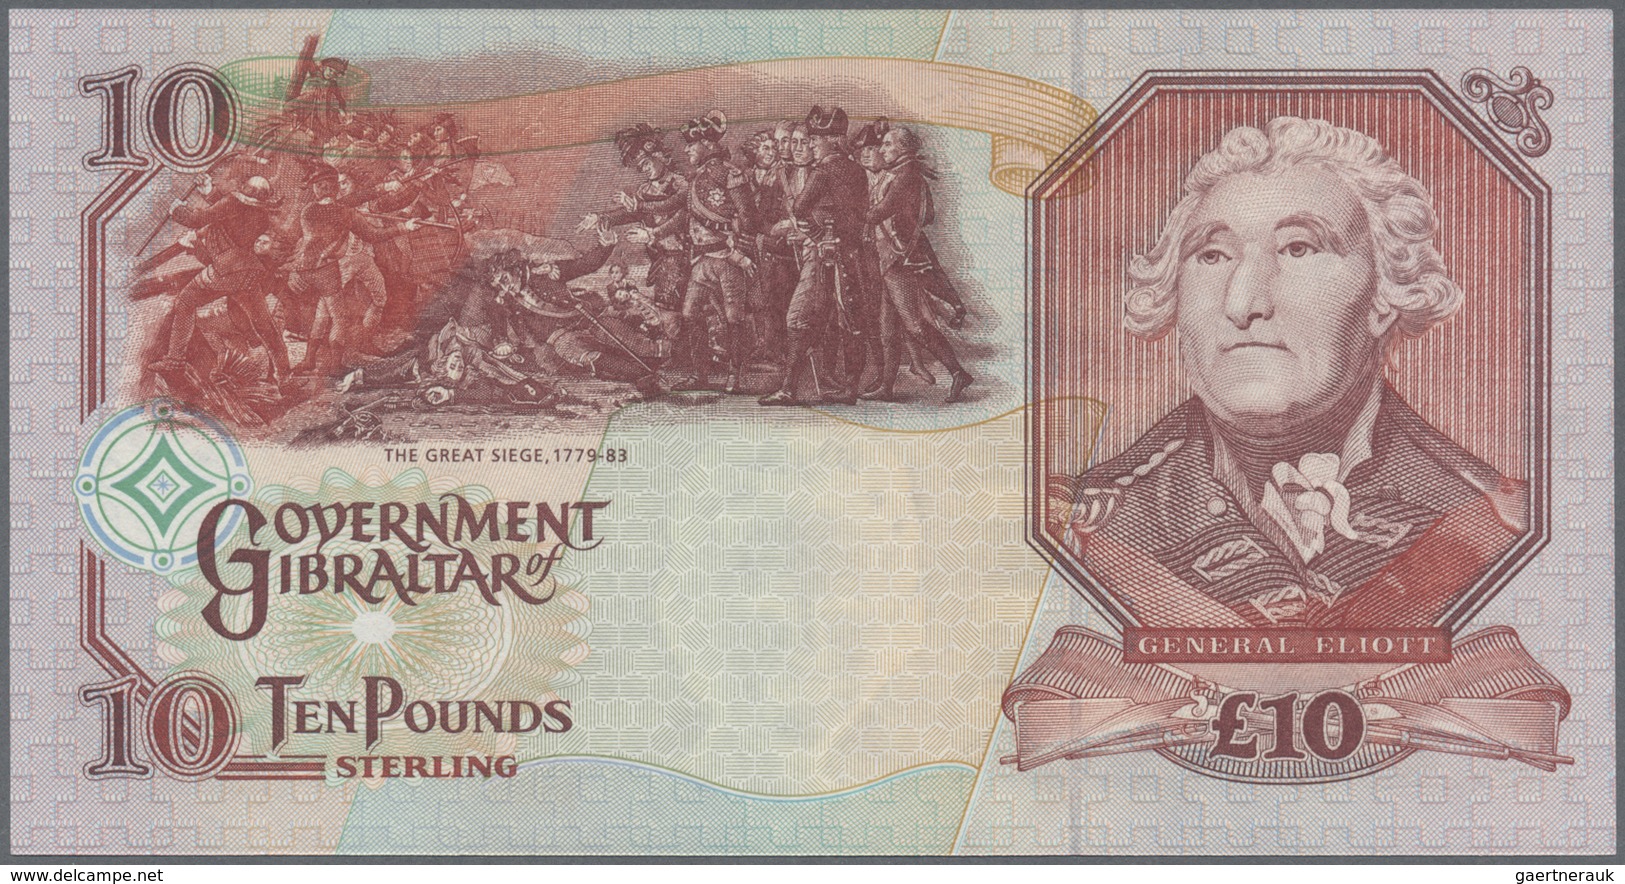 Gibraltar: Set with 6 Banknotes 5 Pounds 2000 P.29, 10 Pounds 2002 P.30, 20 Pounds 2004 P.31, 10 Pou